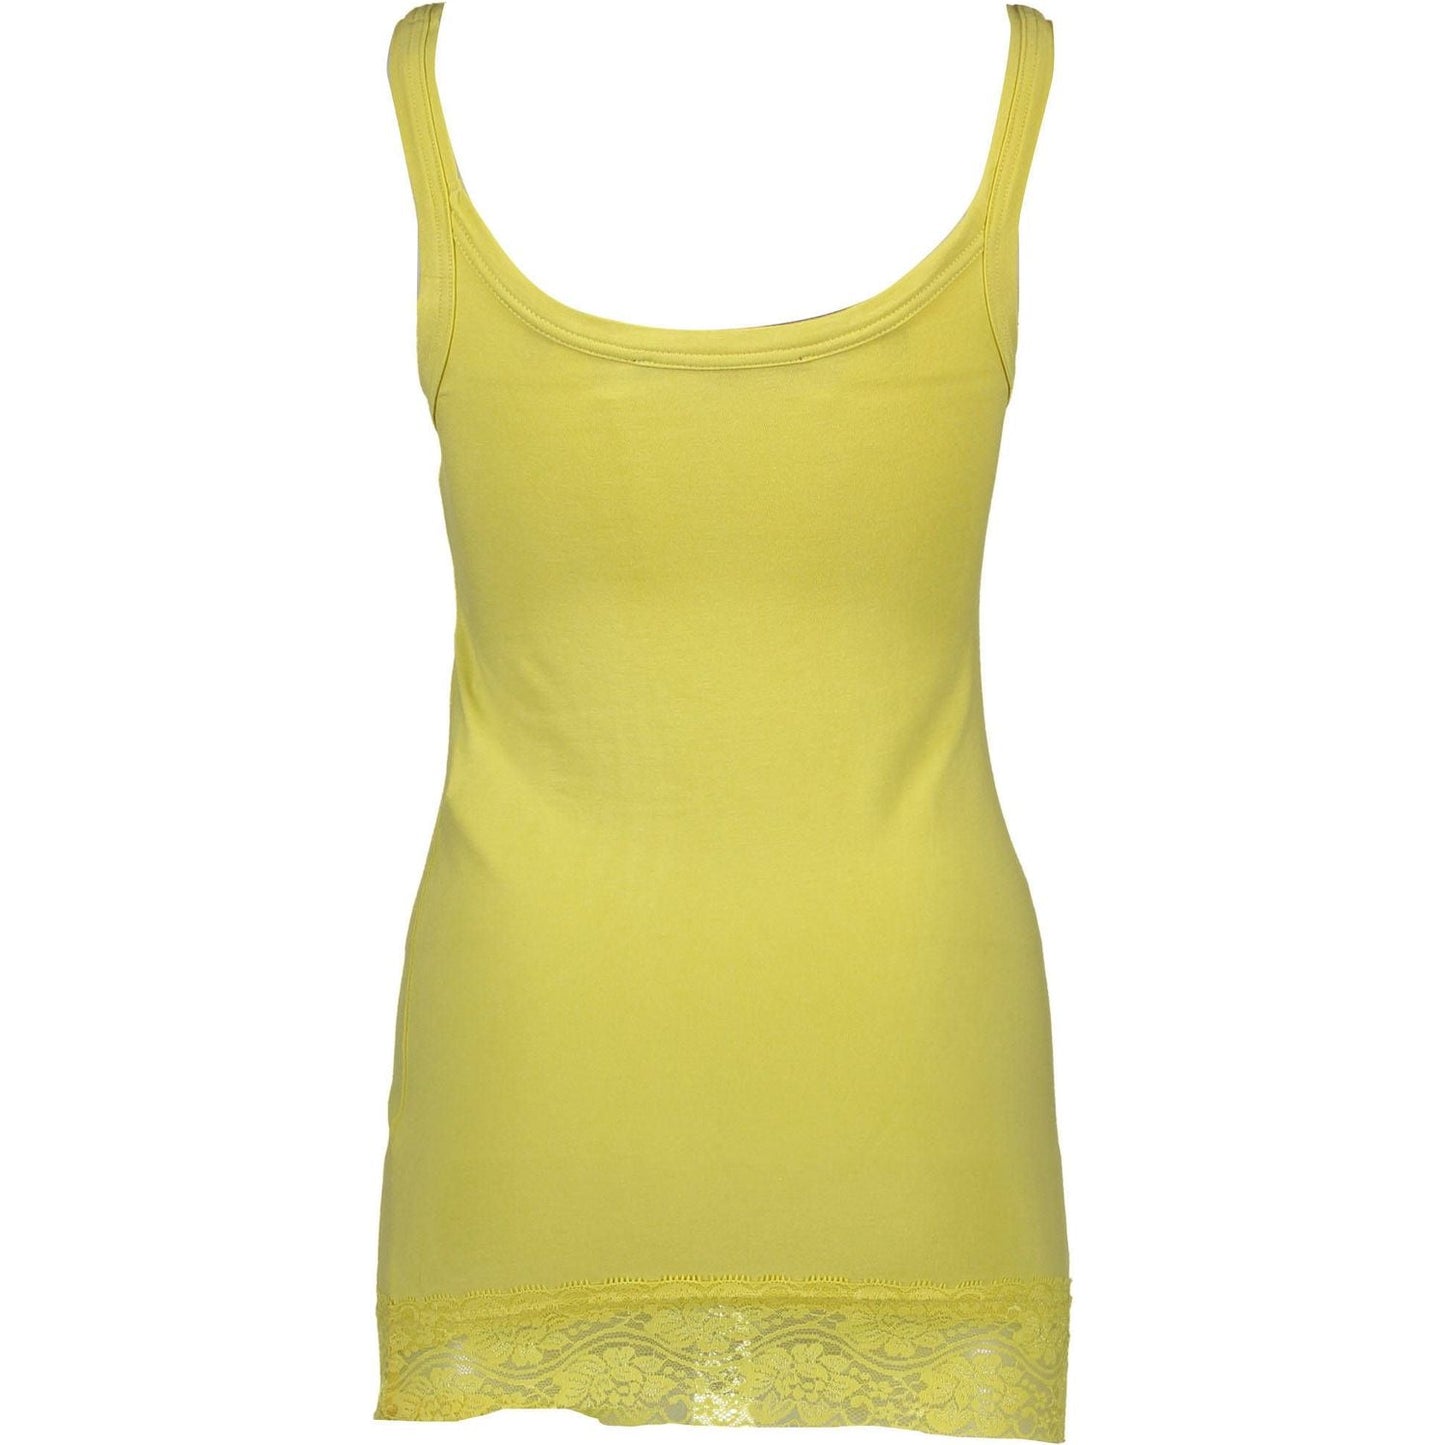 Silvian Heach Chic Yellow Lace-Insert Tank Top chic-yellow-lace-insert-tank-top